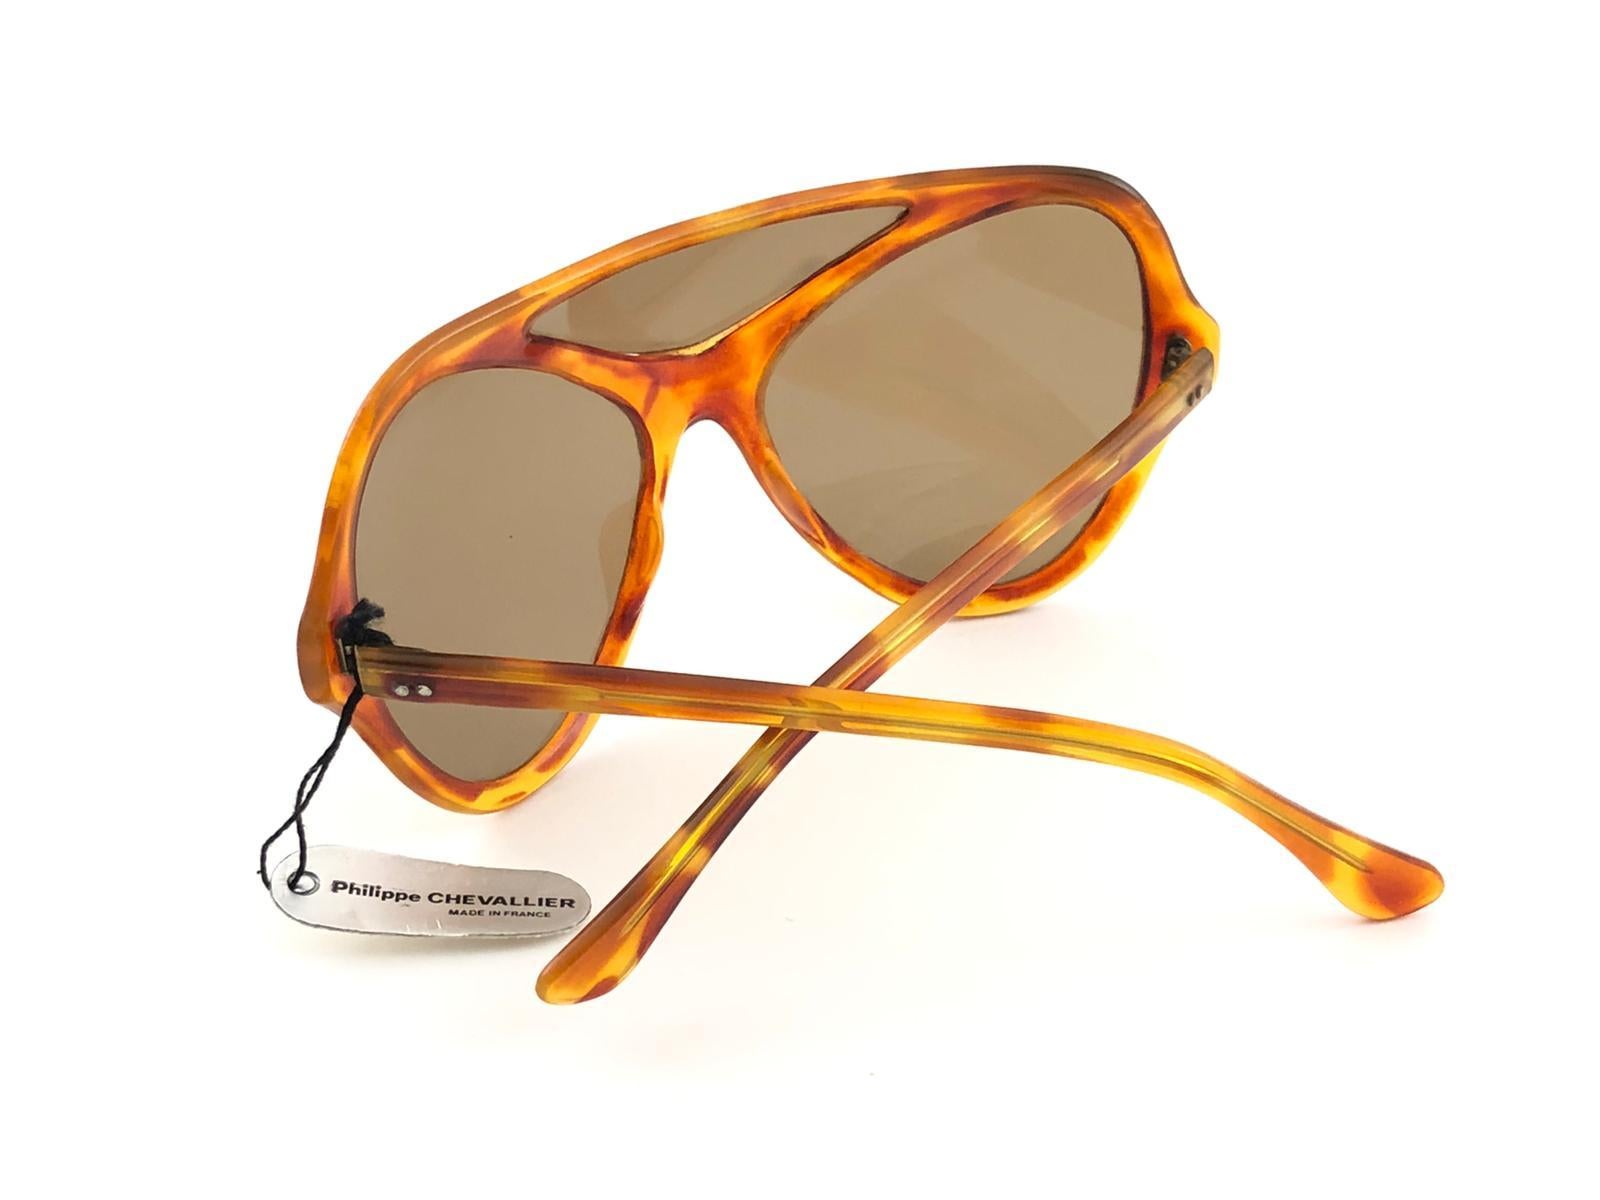 New Vintage Philippe Chevallier III Light Tortoise Miles Davis 1960 Sunglasses For Sale 5